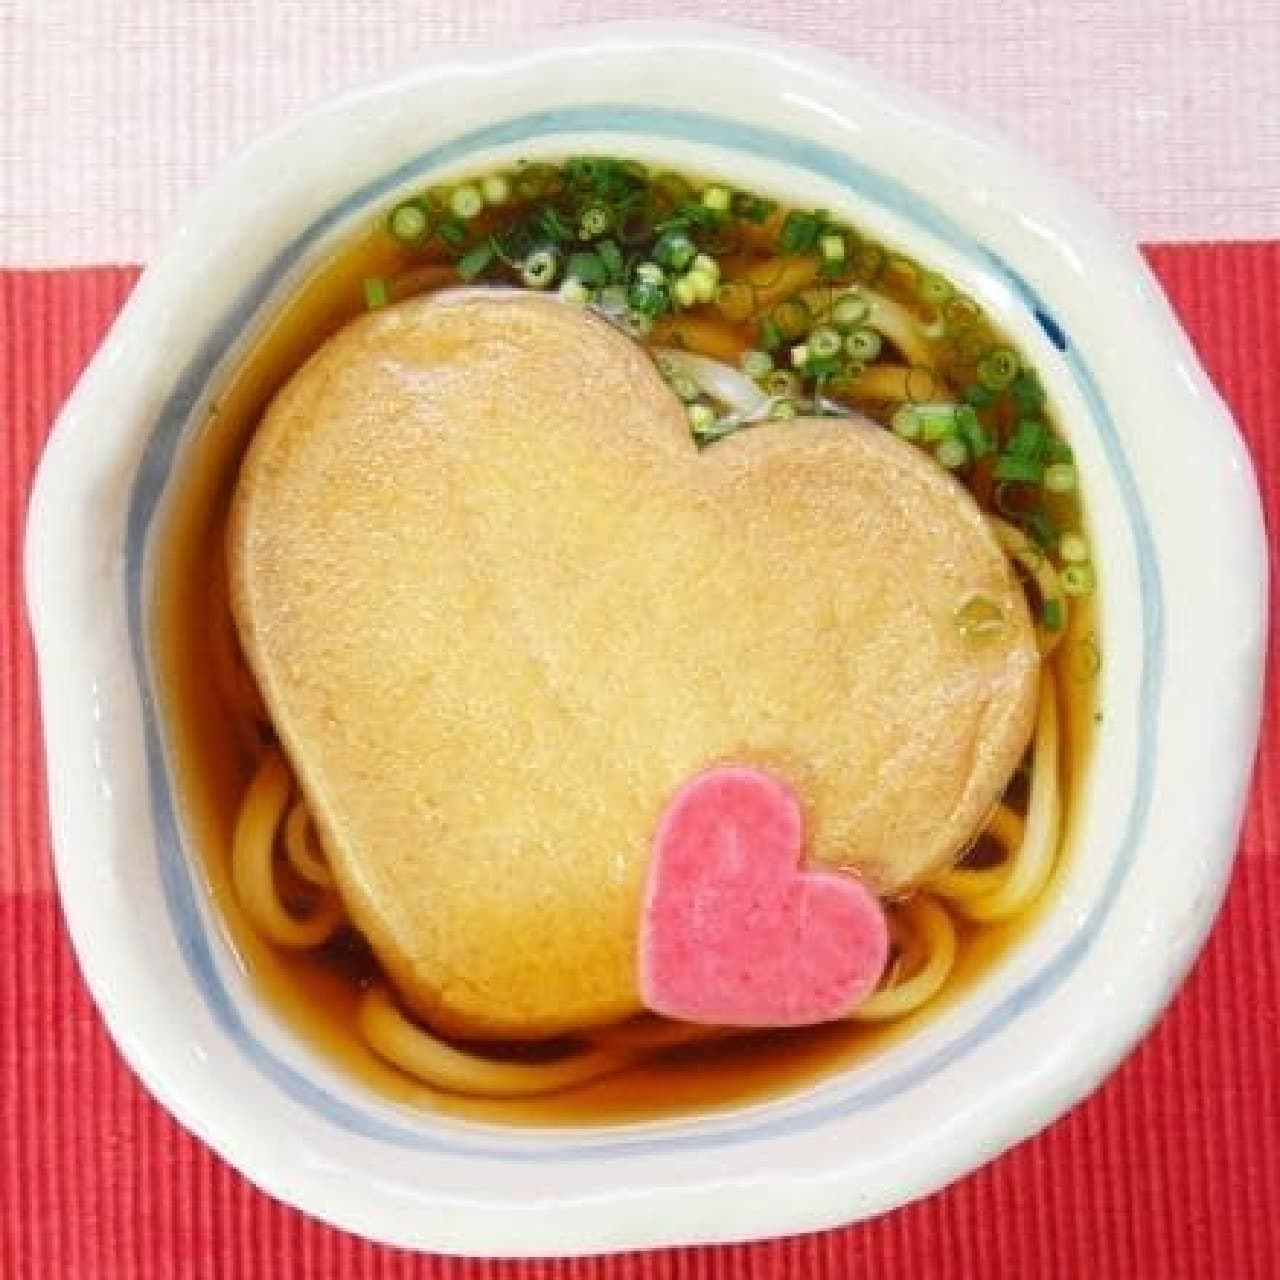 Udon "LOVE Kitsune" with a cute heart-shaped fried food